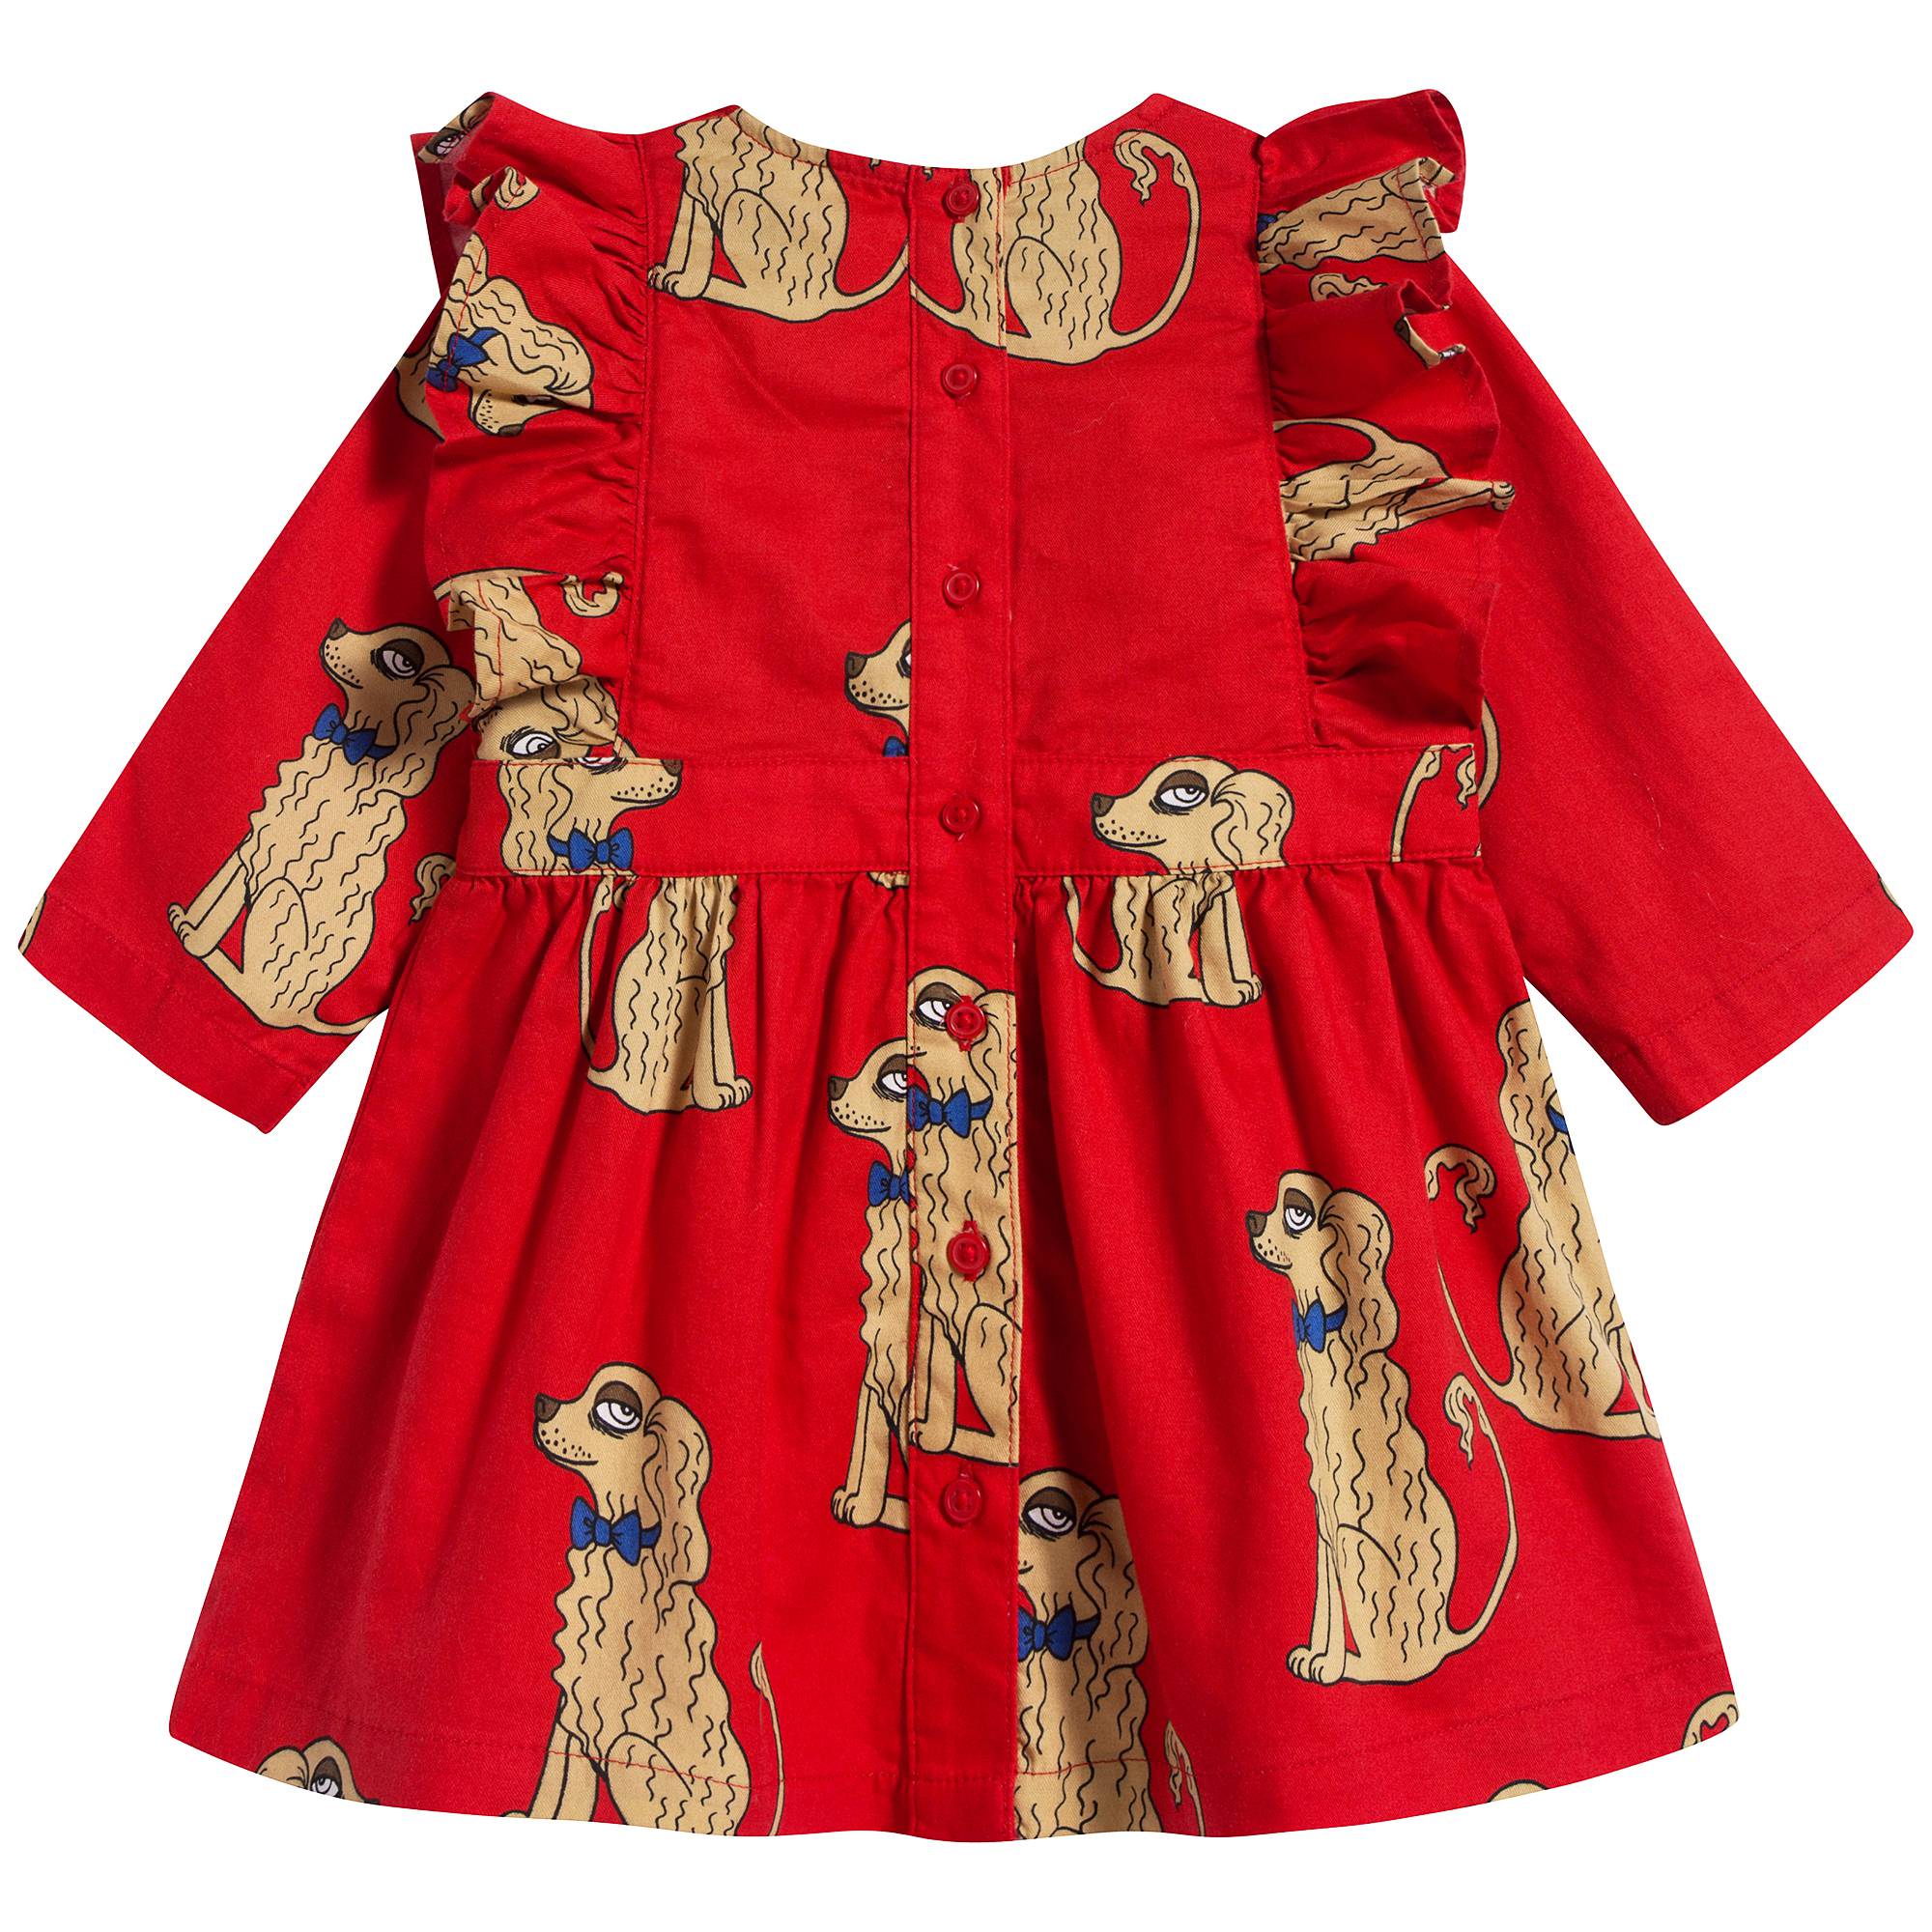 Girls Red Organic Cotton Dress